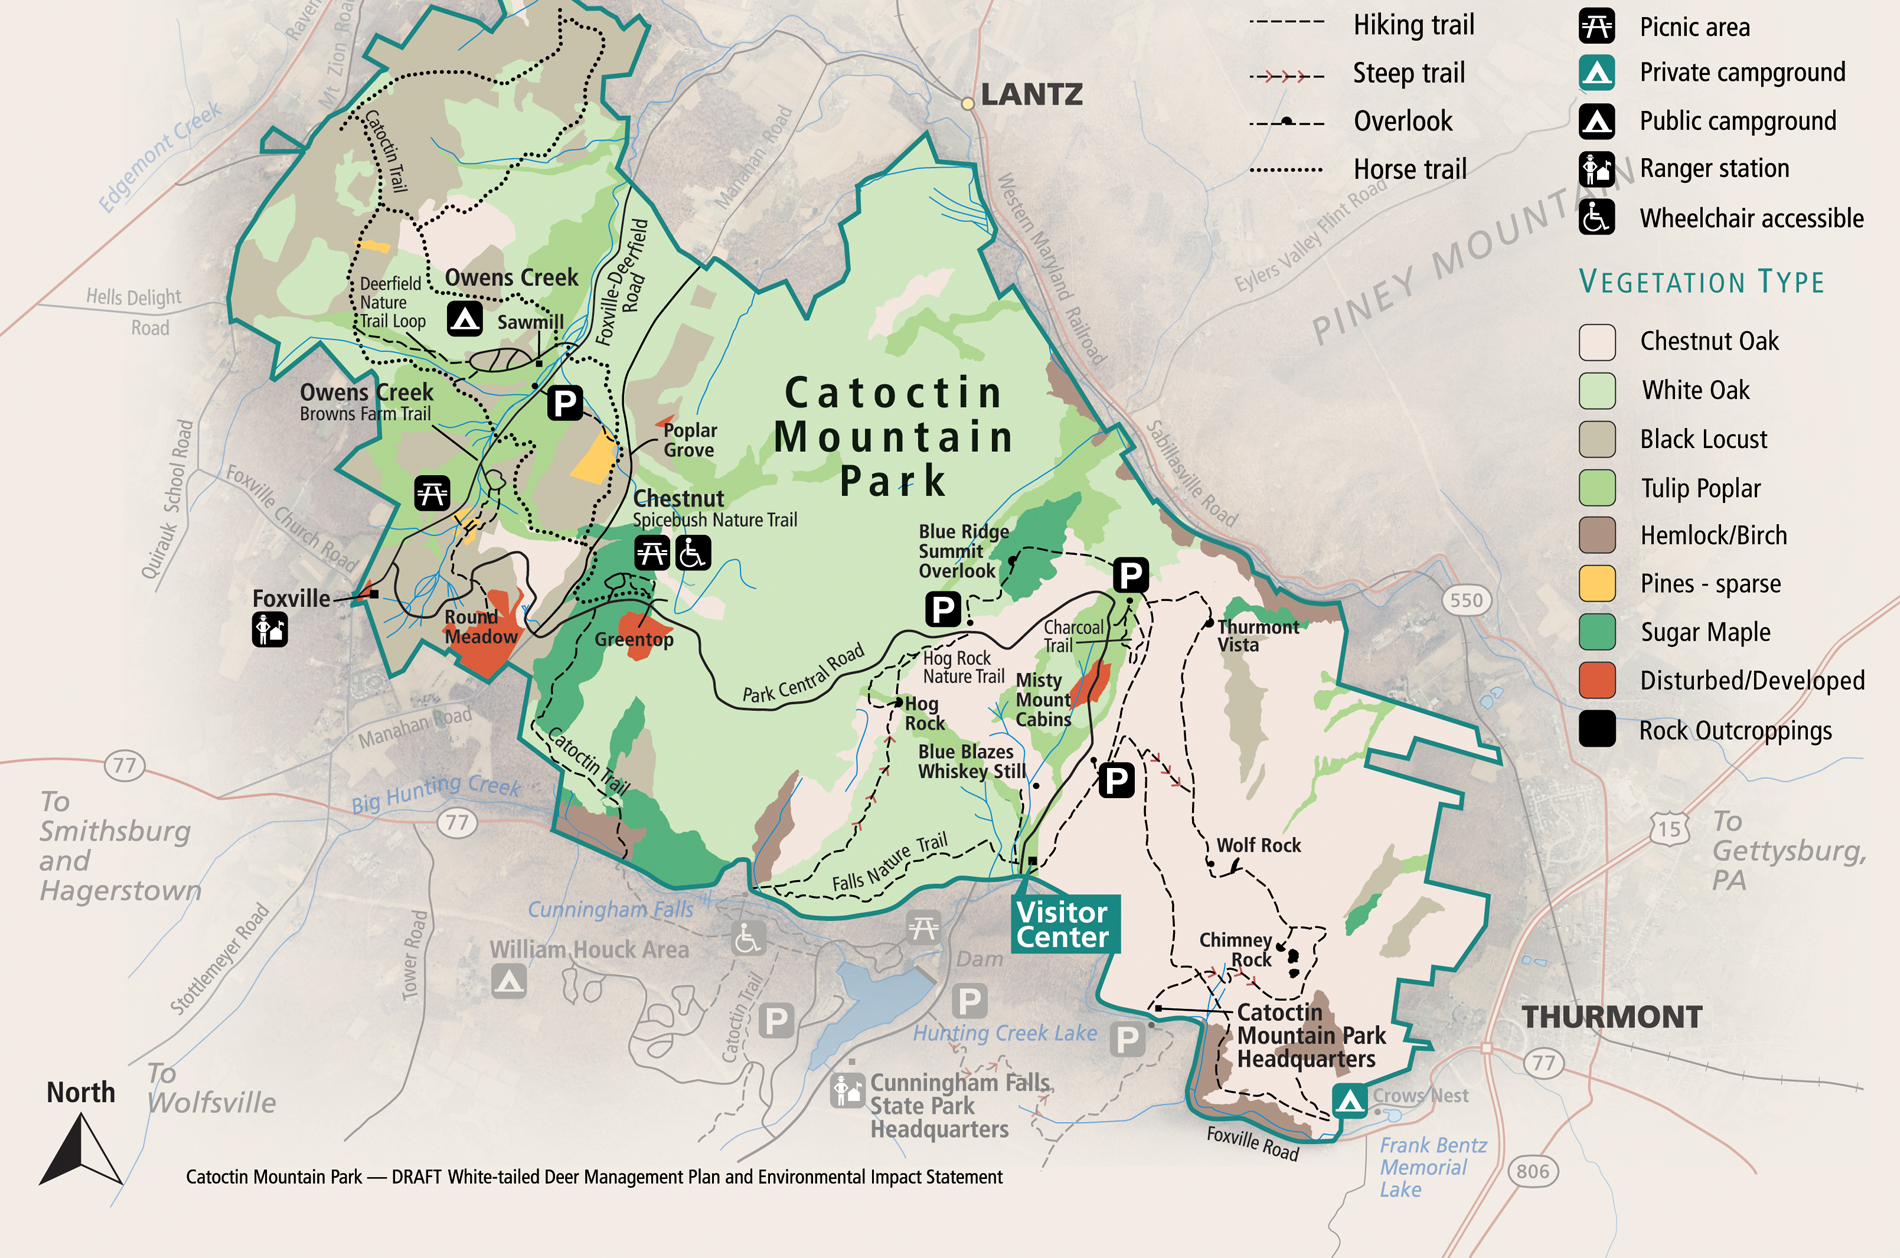 Image of Map Design for National Park Service